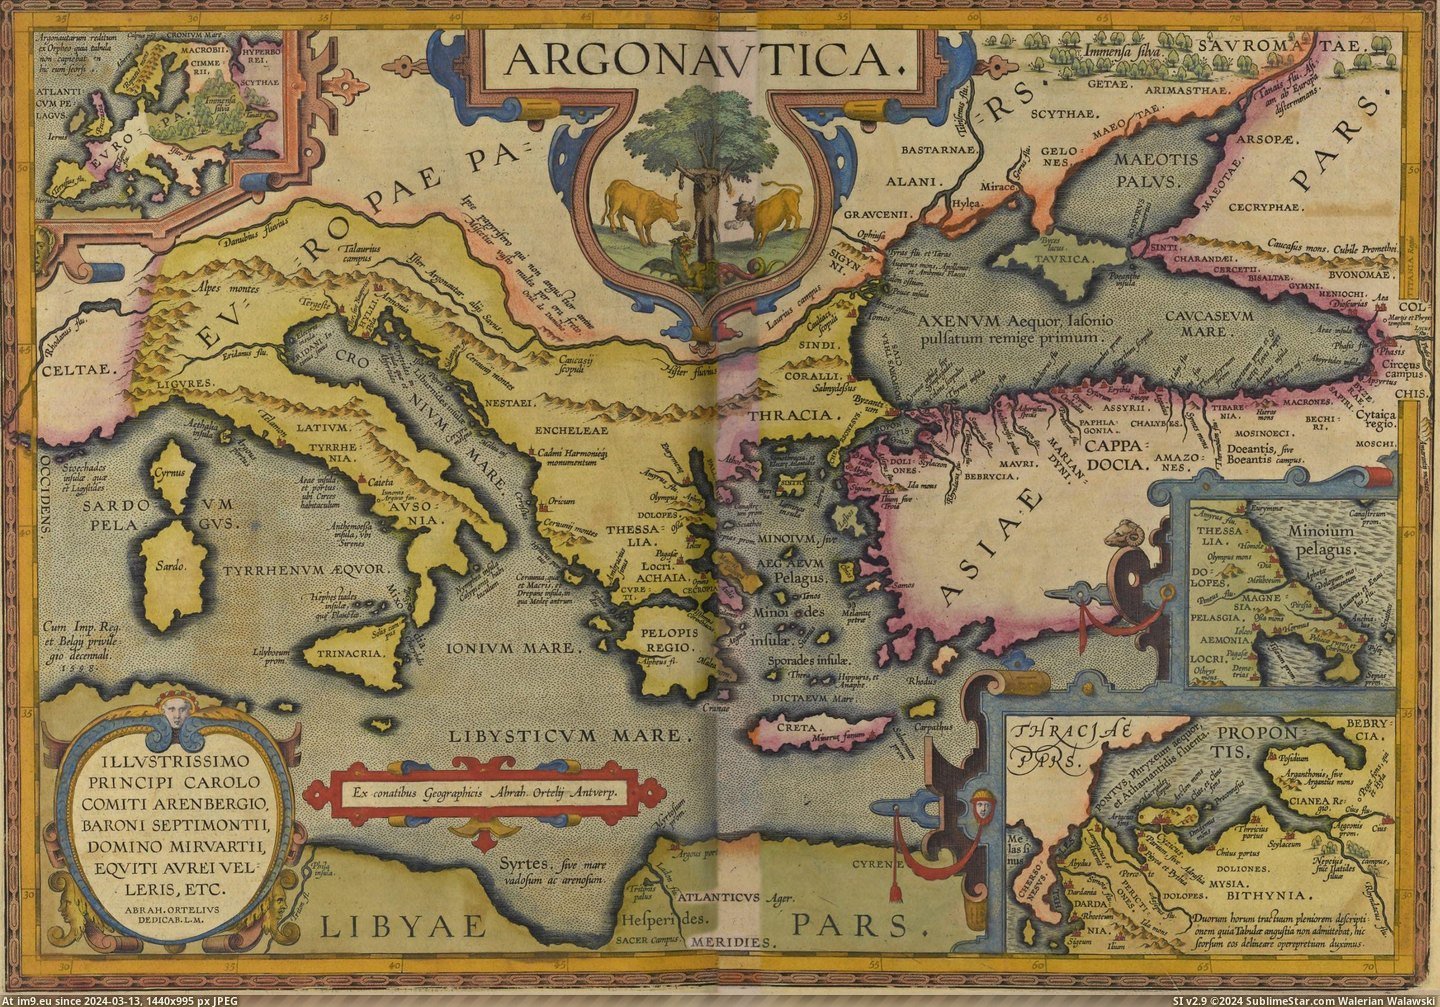 #Map #Voyage #Argonauts #Terrarvm #Theatrvm #Orbis #Argonautica [Mapporn] Argonautica (Map of the voyage of the Argonauts), 'Theatrvm orbis terrarvm' (1603) [3188x2278] Pic. (Image of album My r/MAPS favs))